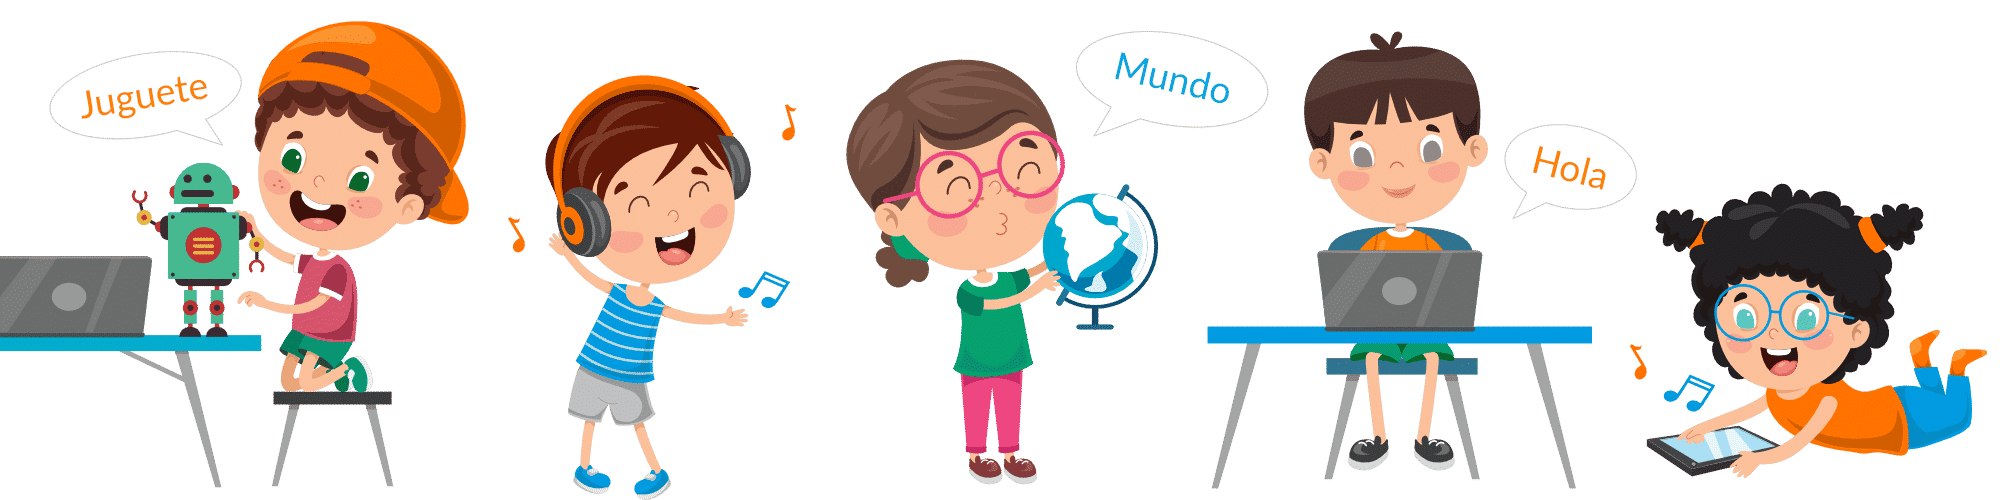 Online Spanish Immersion Classes for Kids | TruFluency Kids